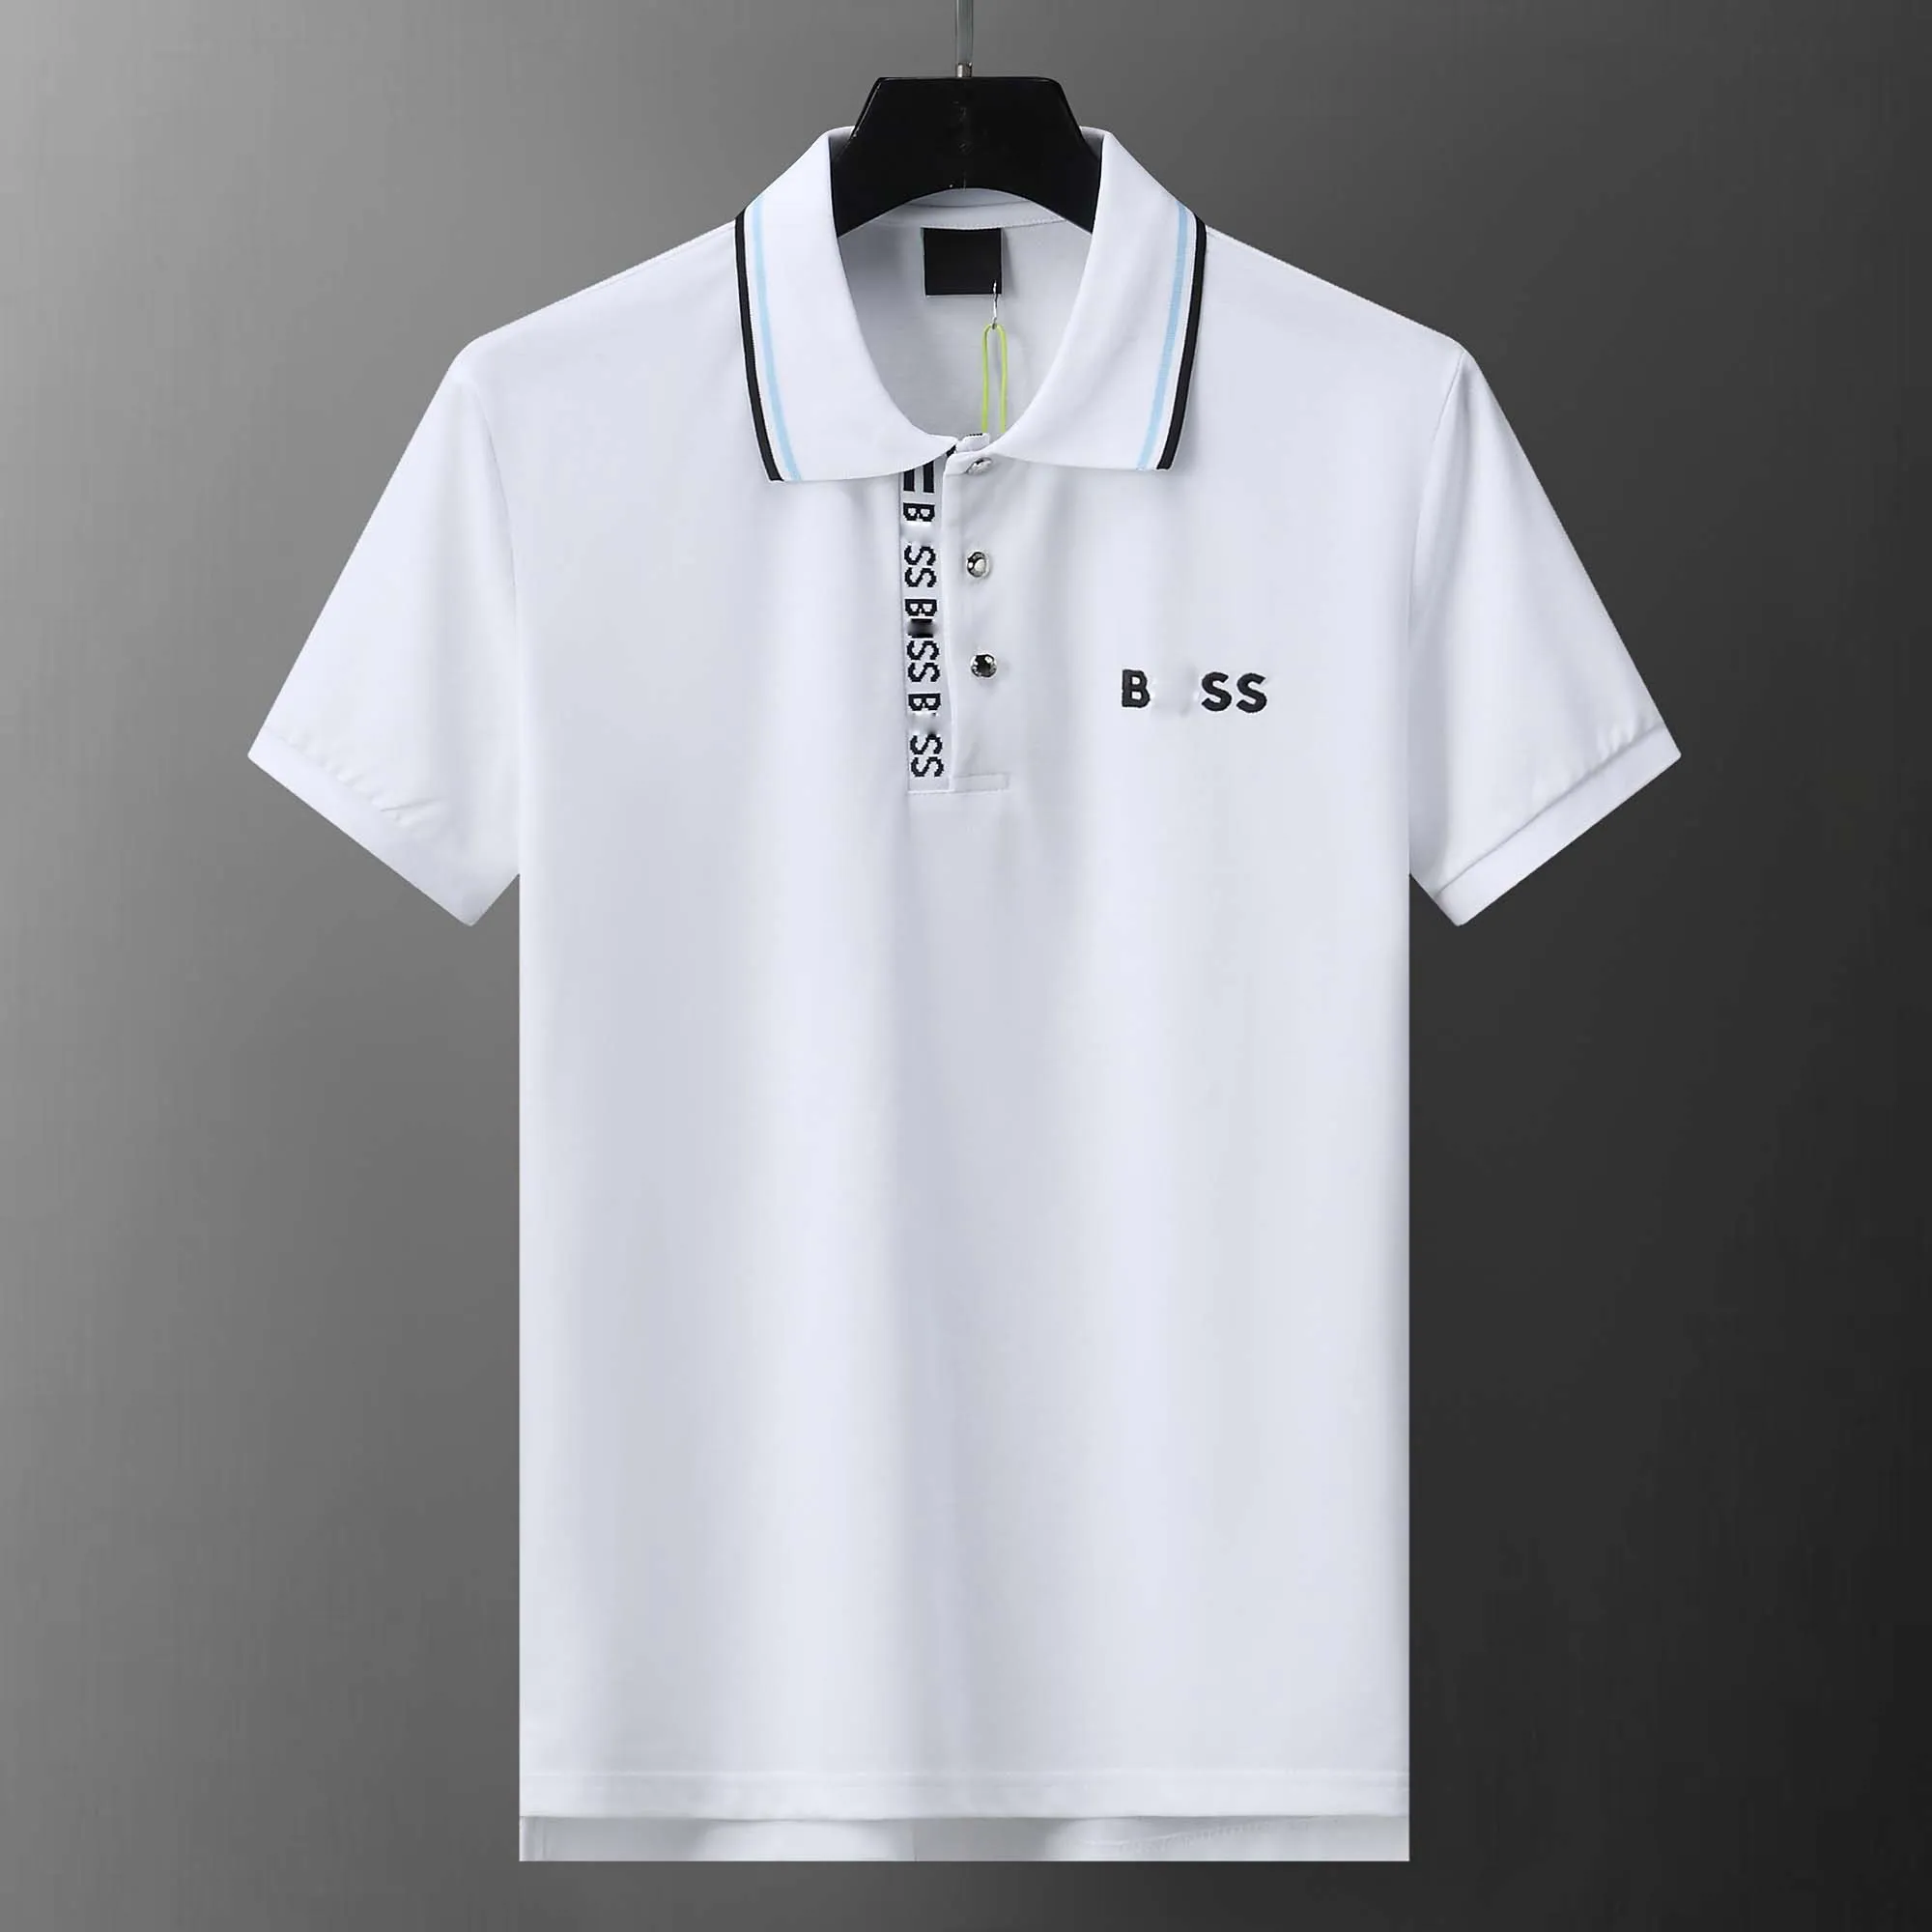 Heren T-shirt Designer Poloshirt Herenpolo's High-End Borduren Mode Kraag Heren Top T-shirt Luxe #031